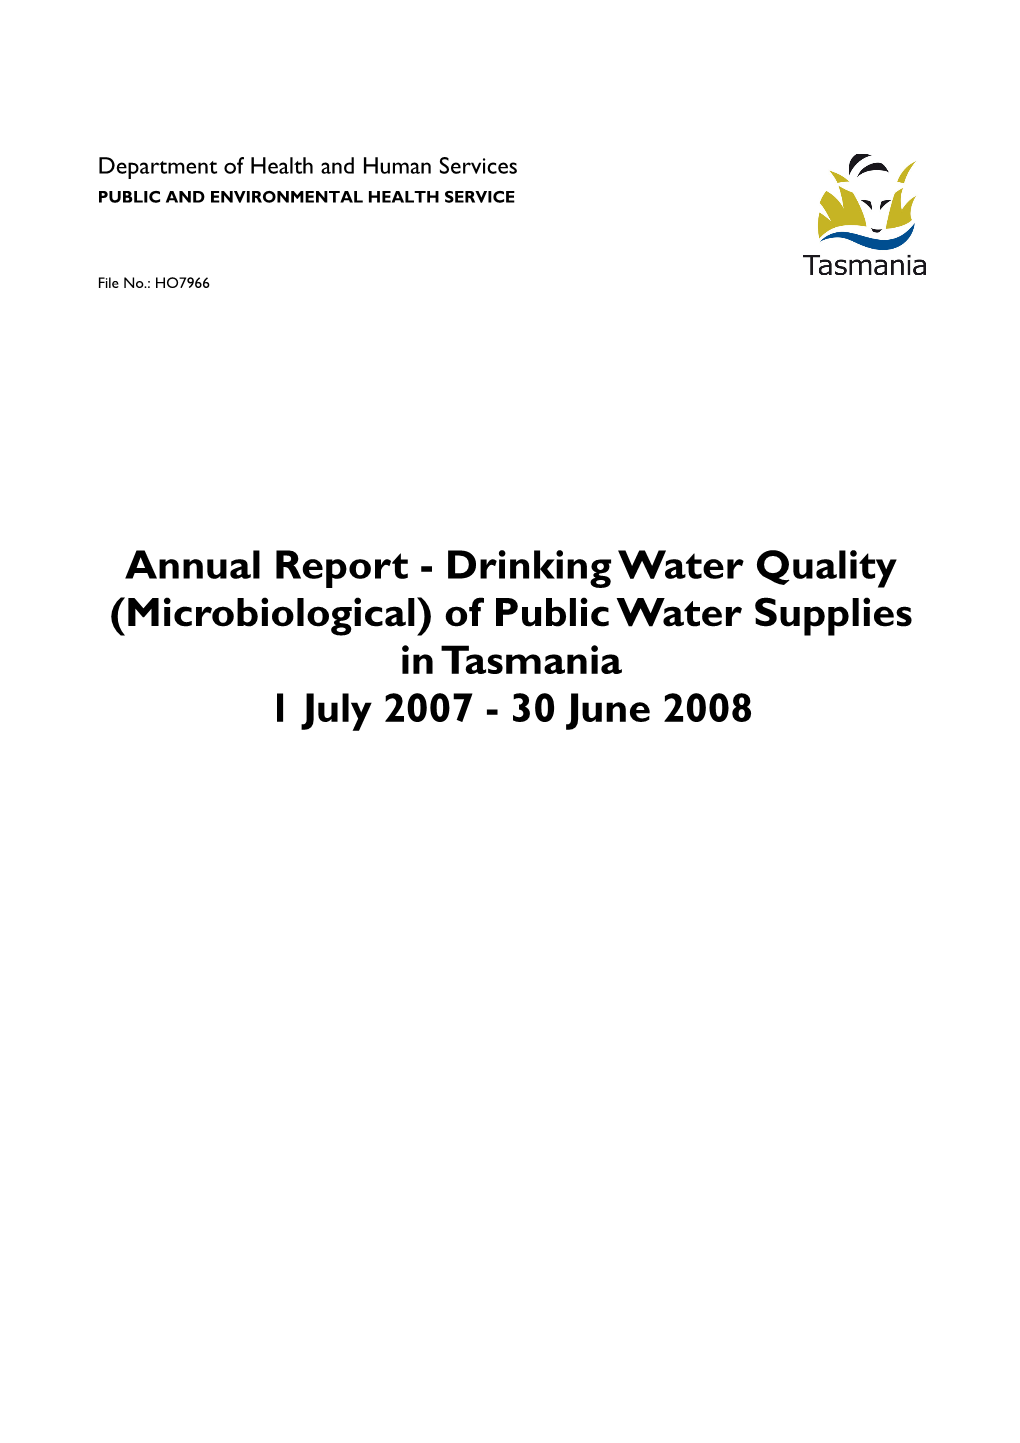 (Microbiological) of Public Water Supplies in Tasmania 1 July 2007 - 30 June 2008